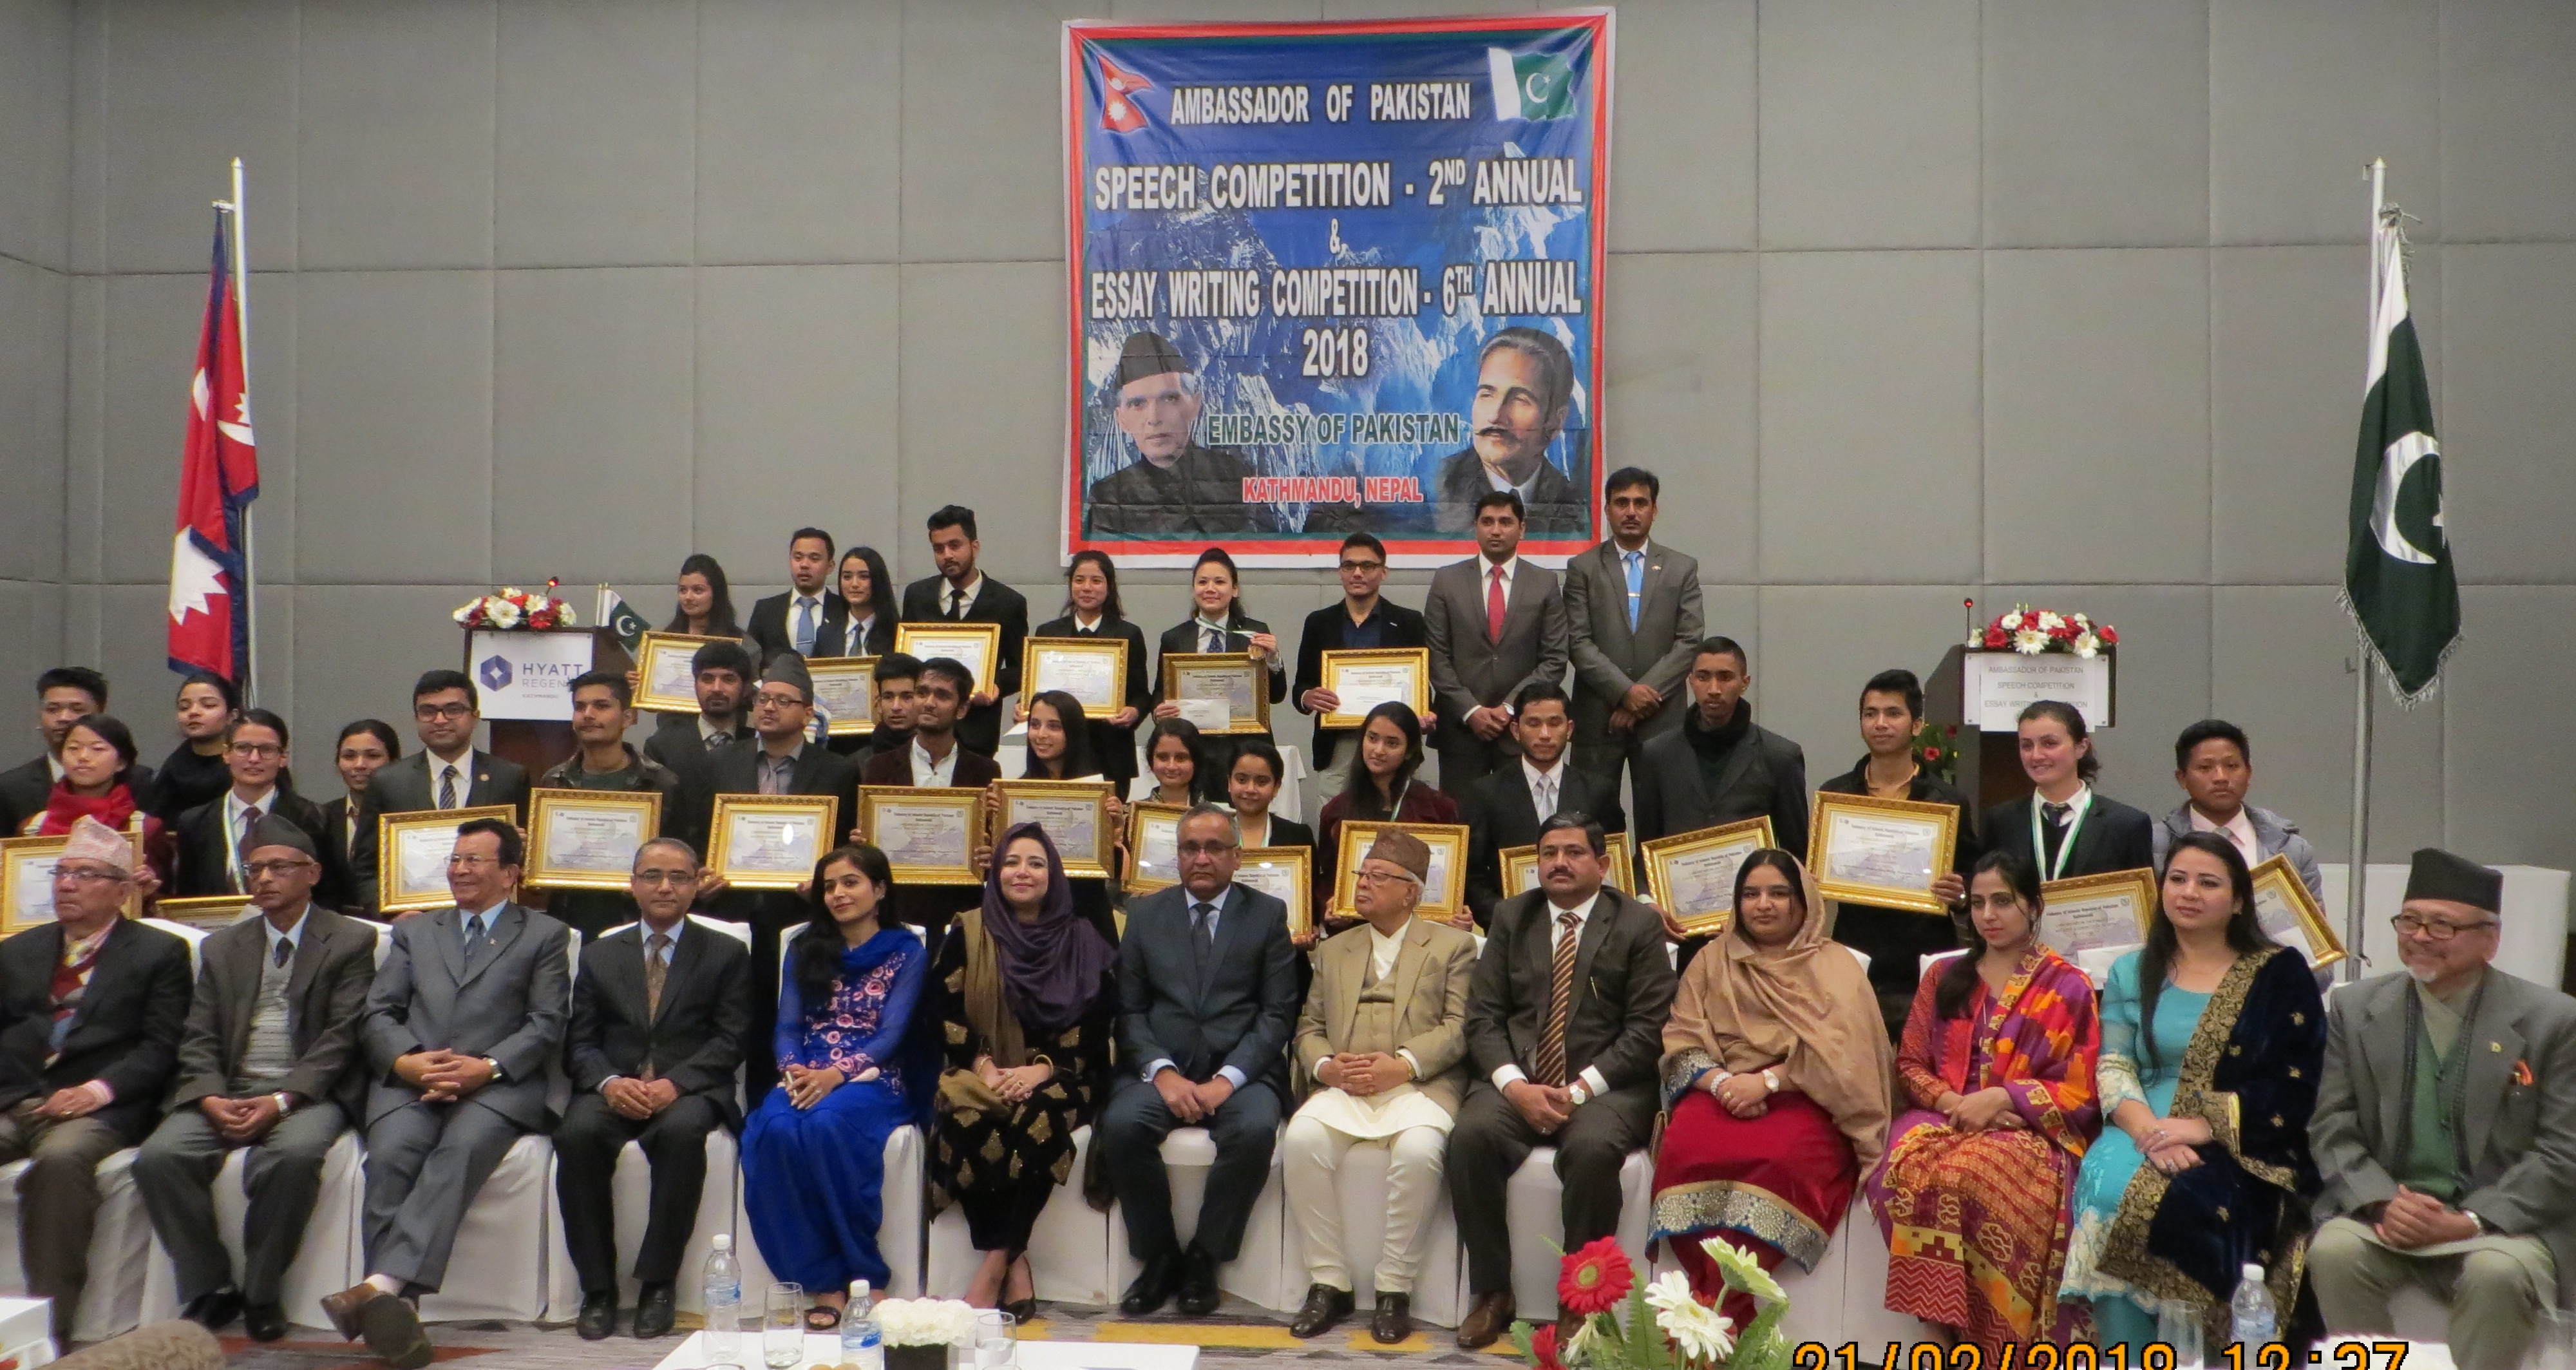 Ambassador of Pakistan Essay Writing and Speech Competition - 2018